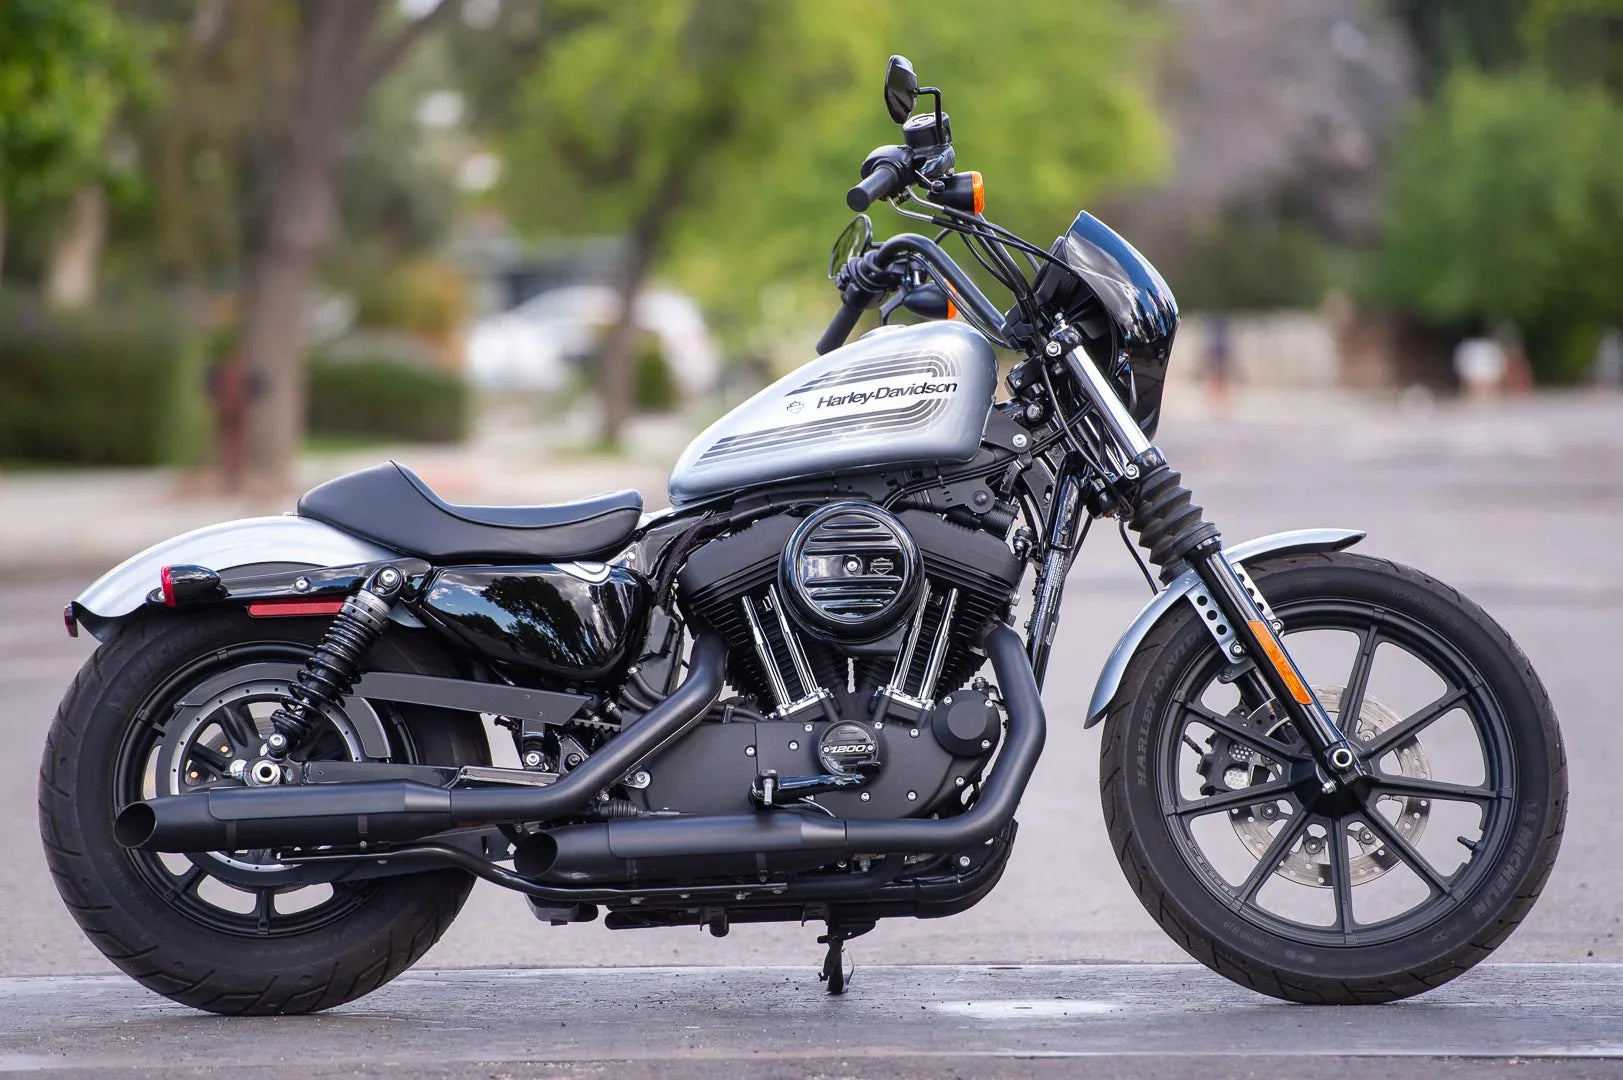 Harley-Davidson Sportster 1200 balanced power for confidence